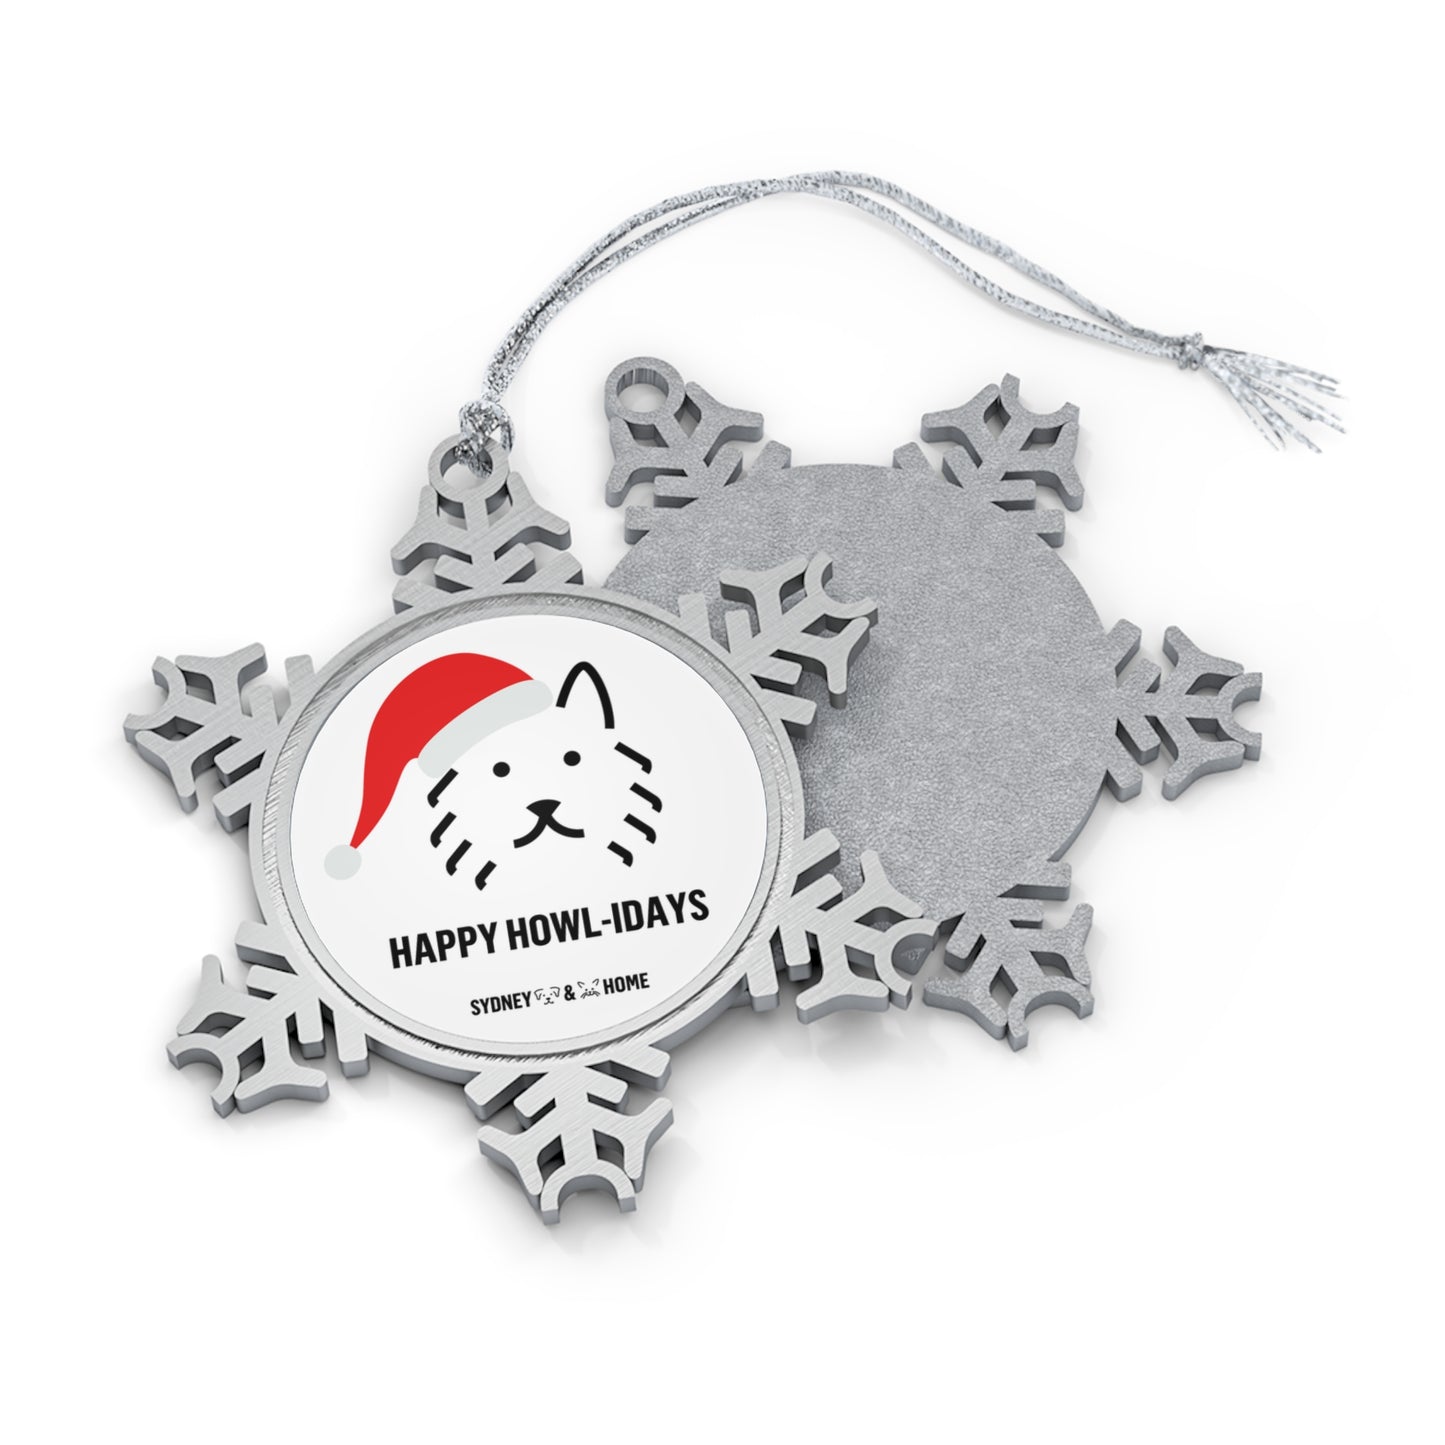 Christmas Ornament - Happy Howl-idays